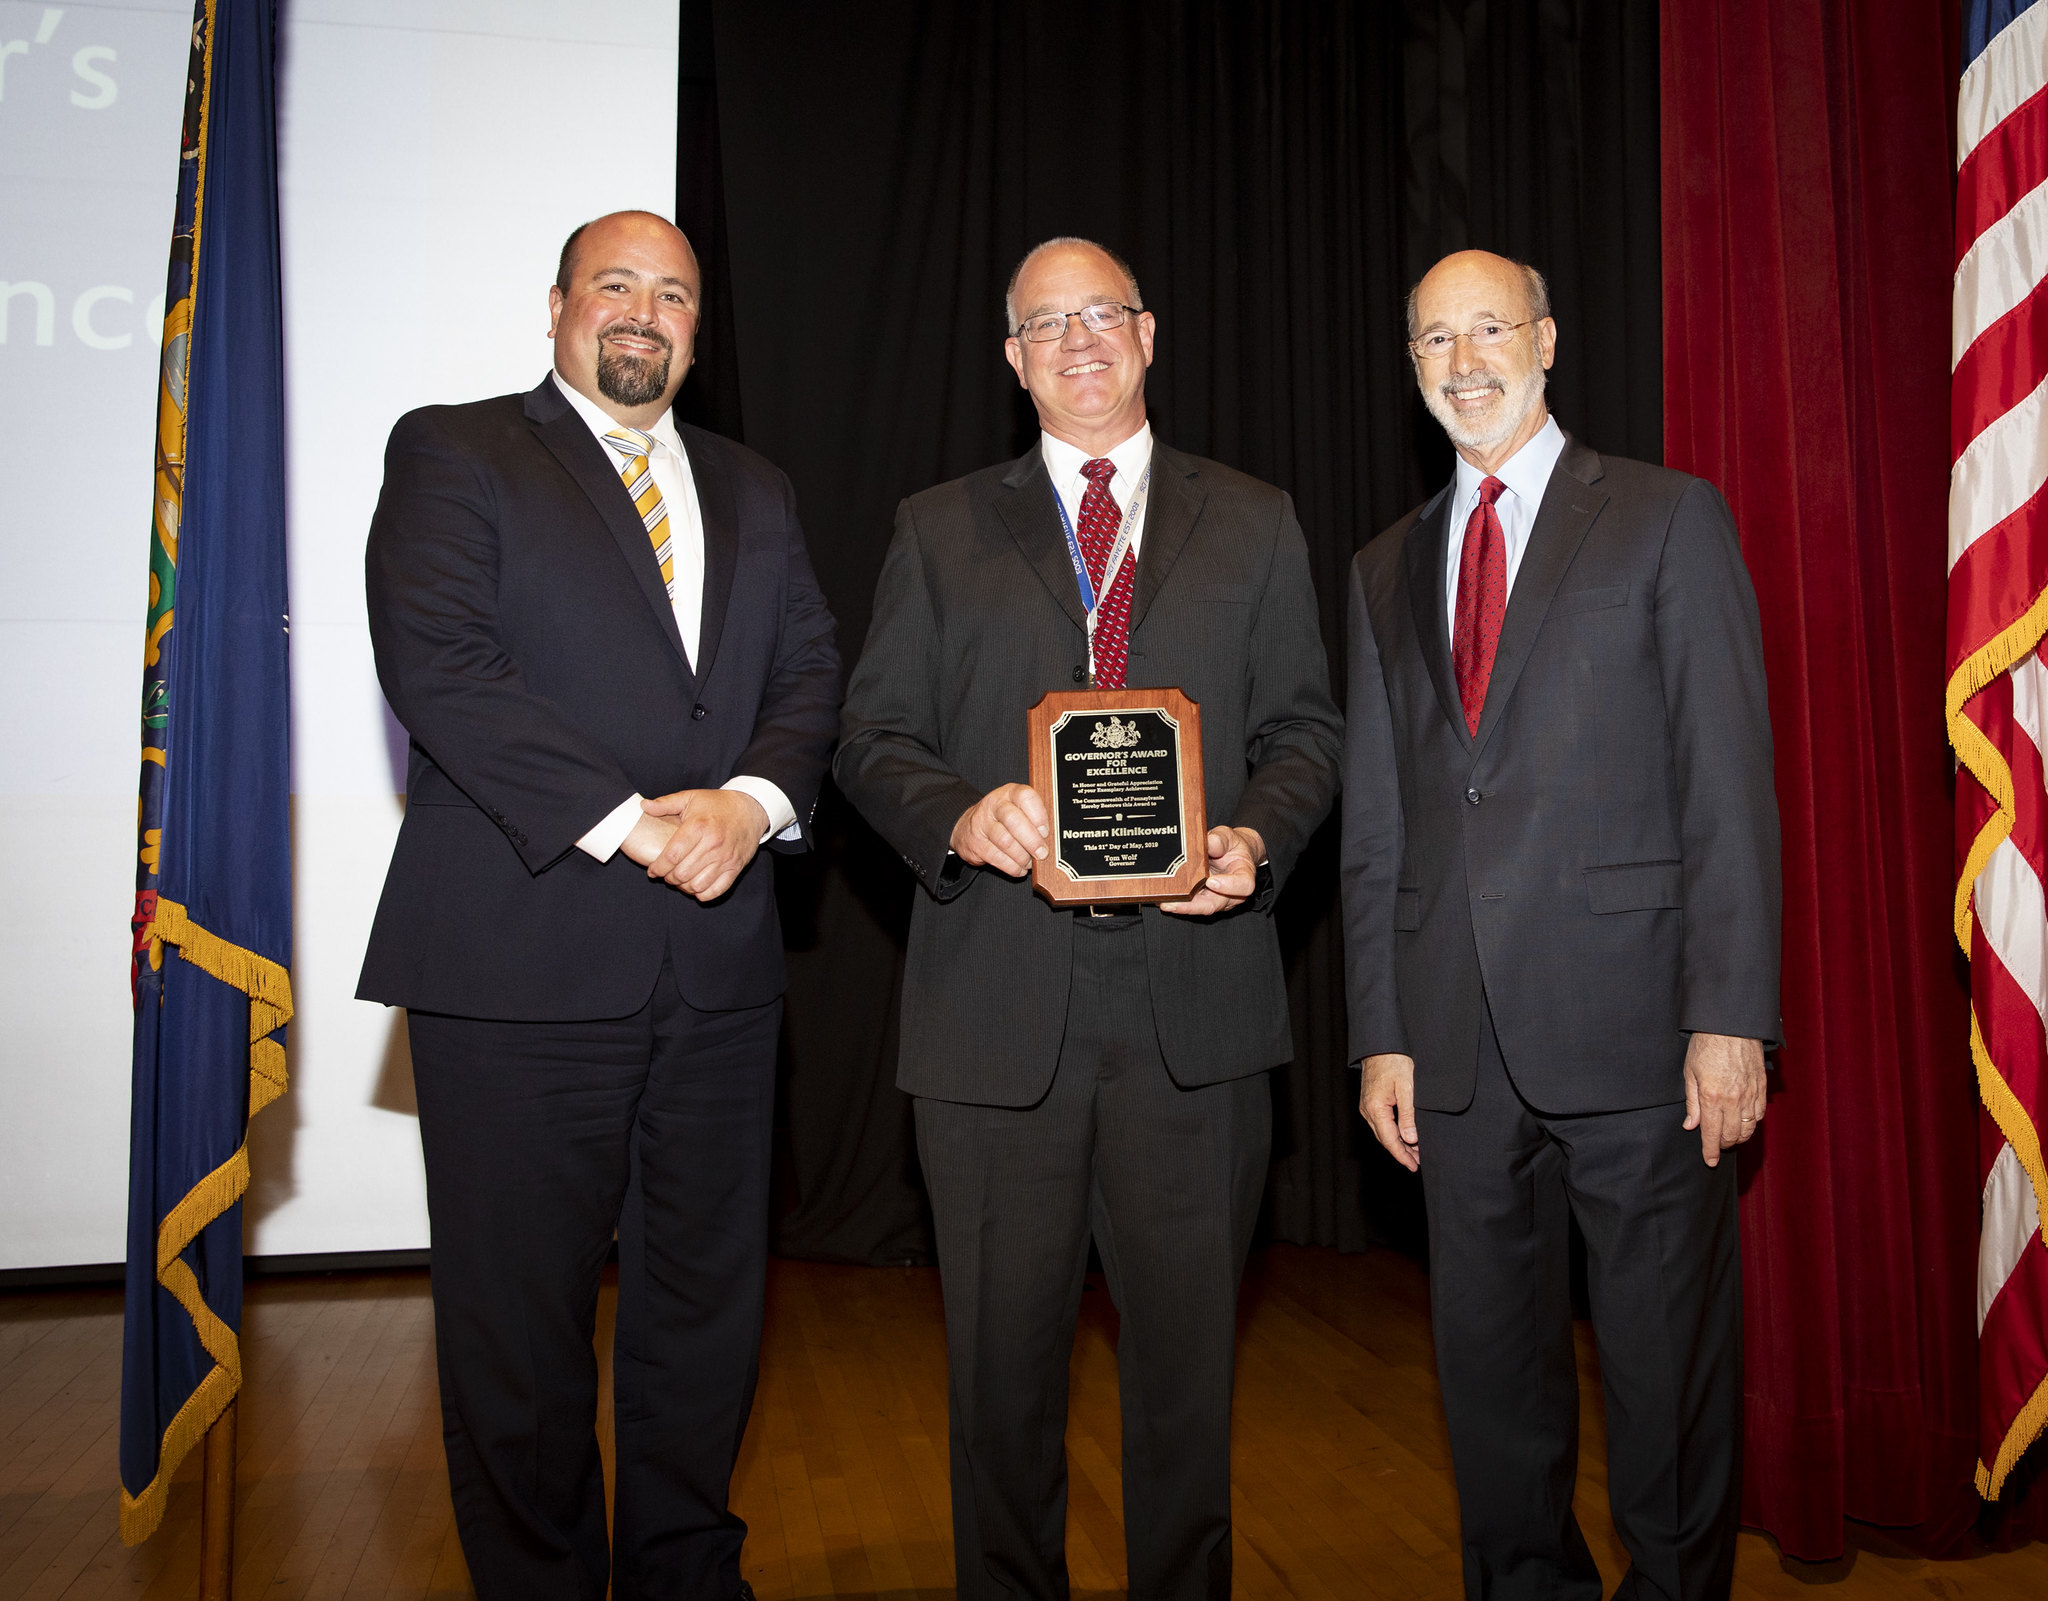 Norm Klinikowski receives an award from Governor Wolf